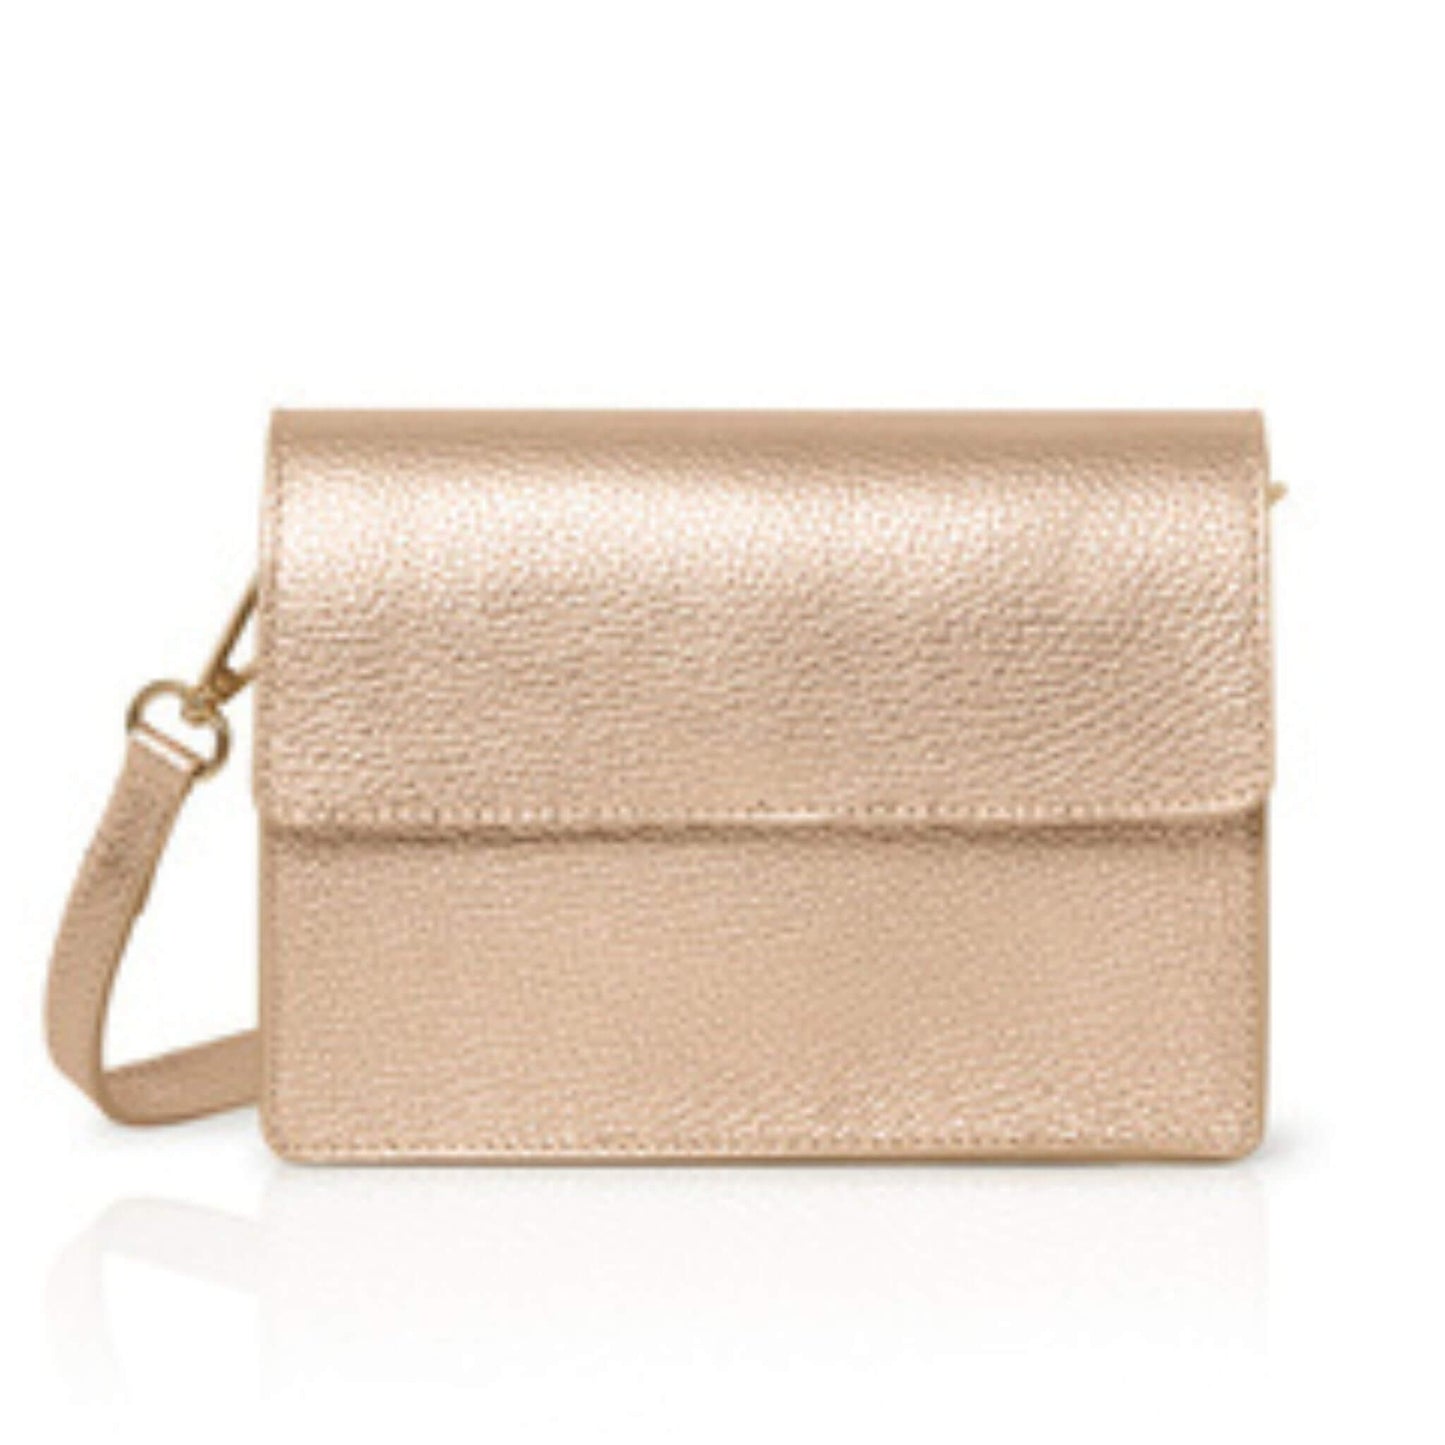 Scarlett - Rose Gold Leather Crossbody Bag